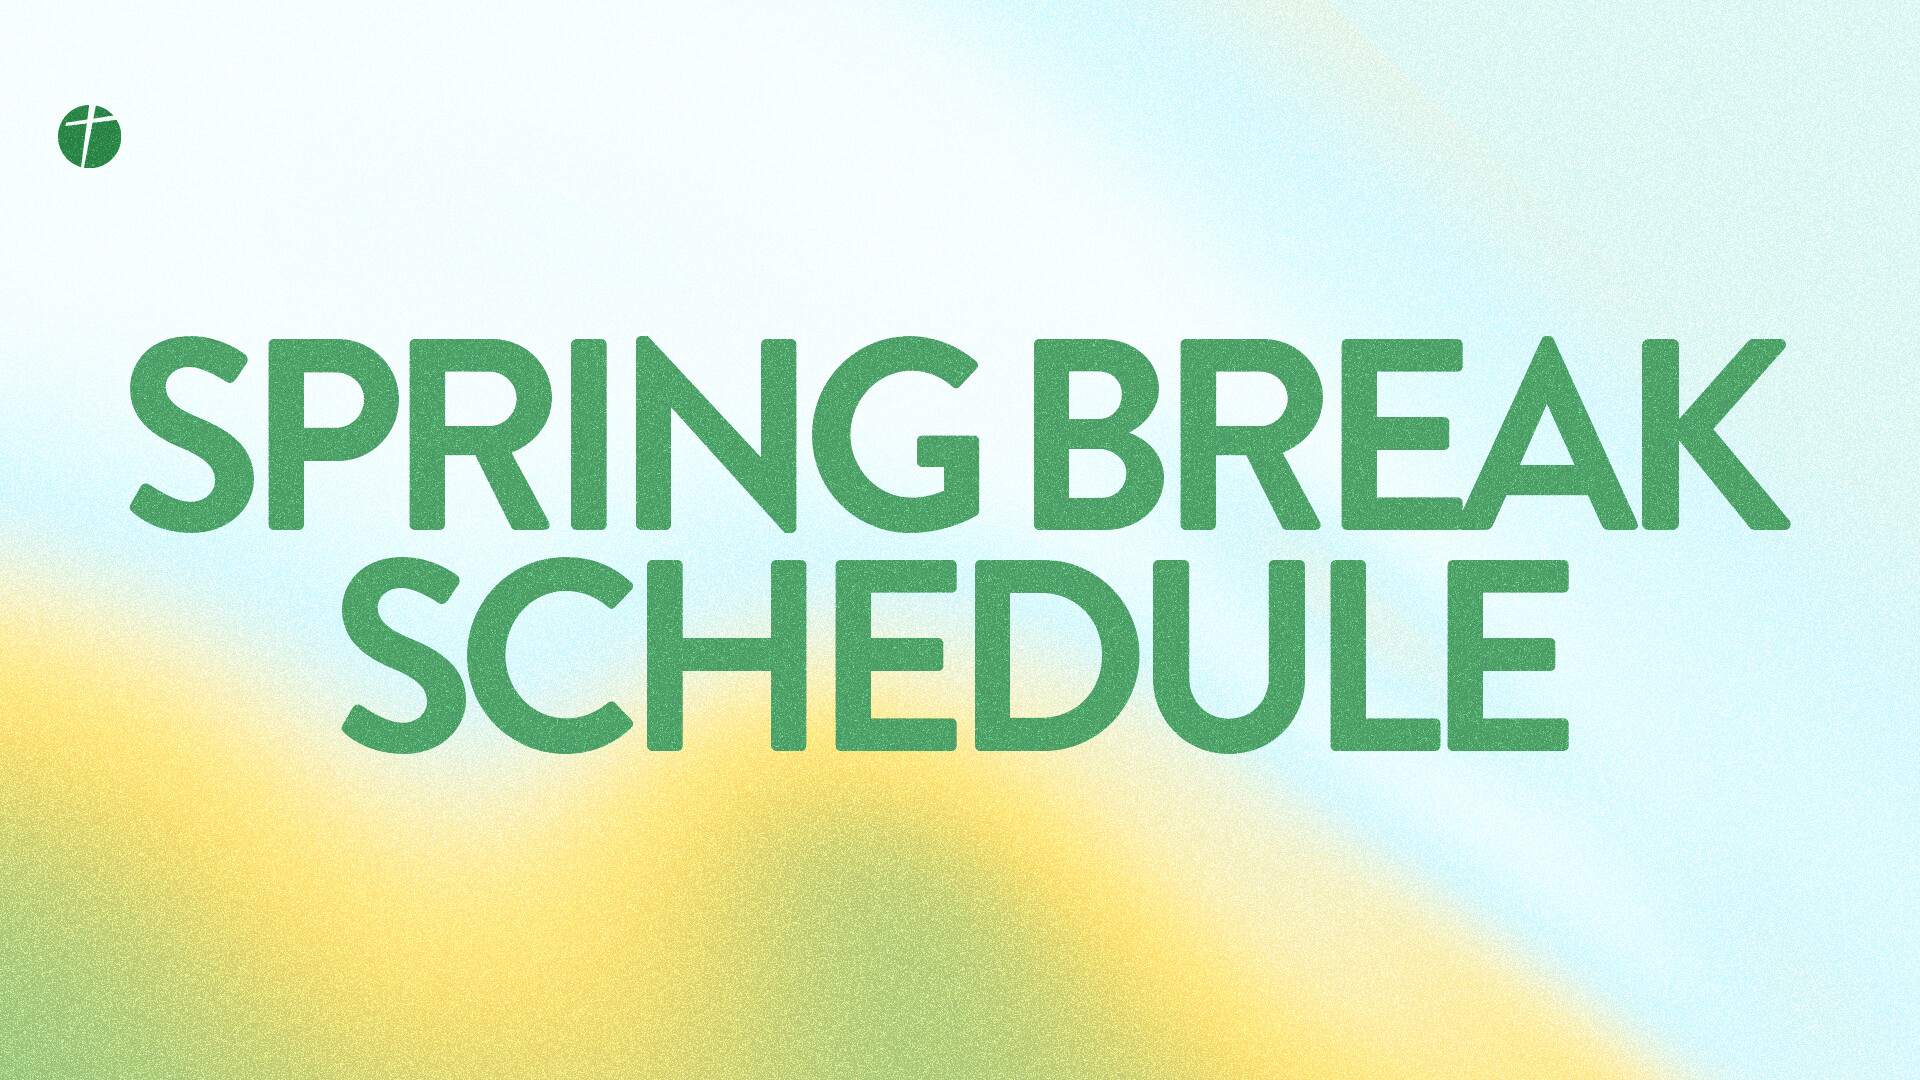 Battlefield & Buchanan Spring Break Schedule